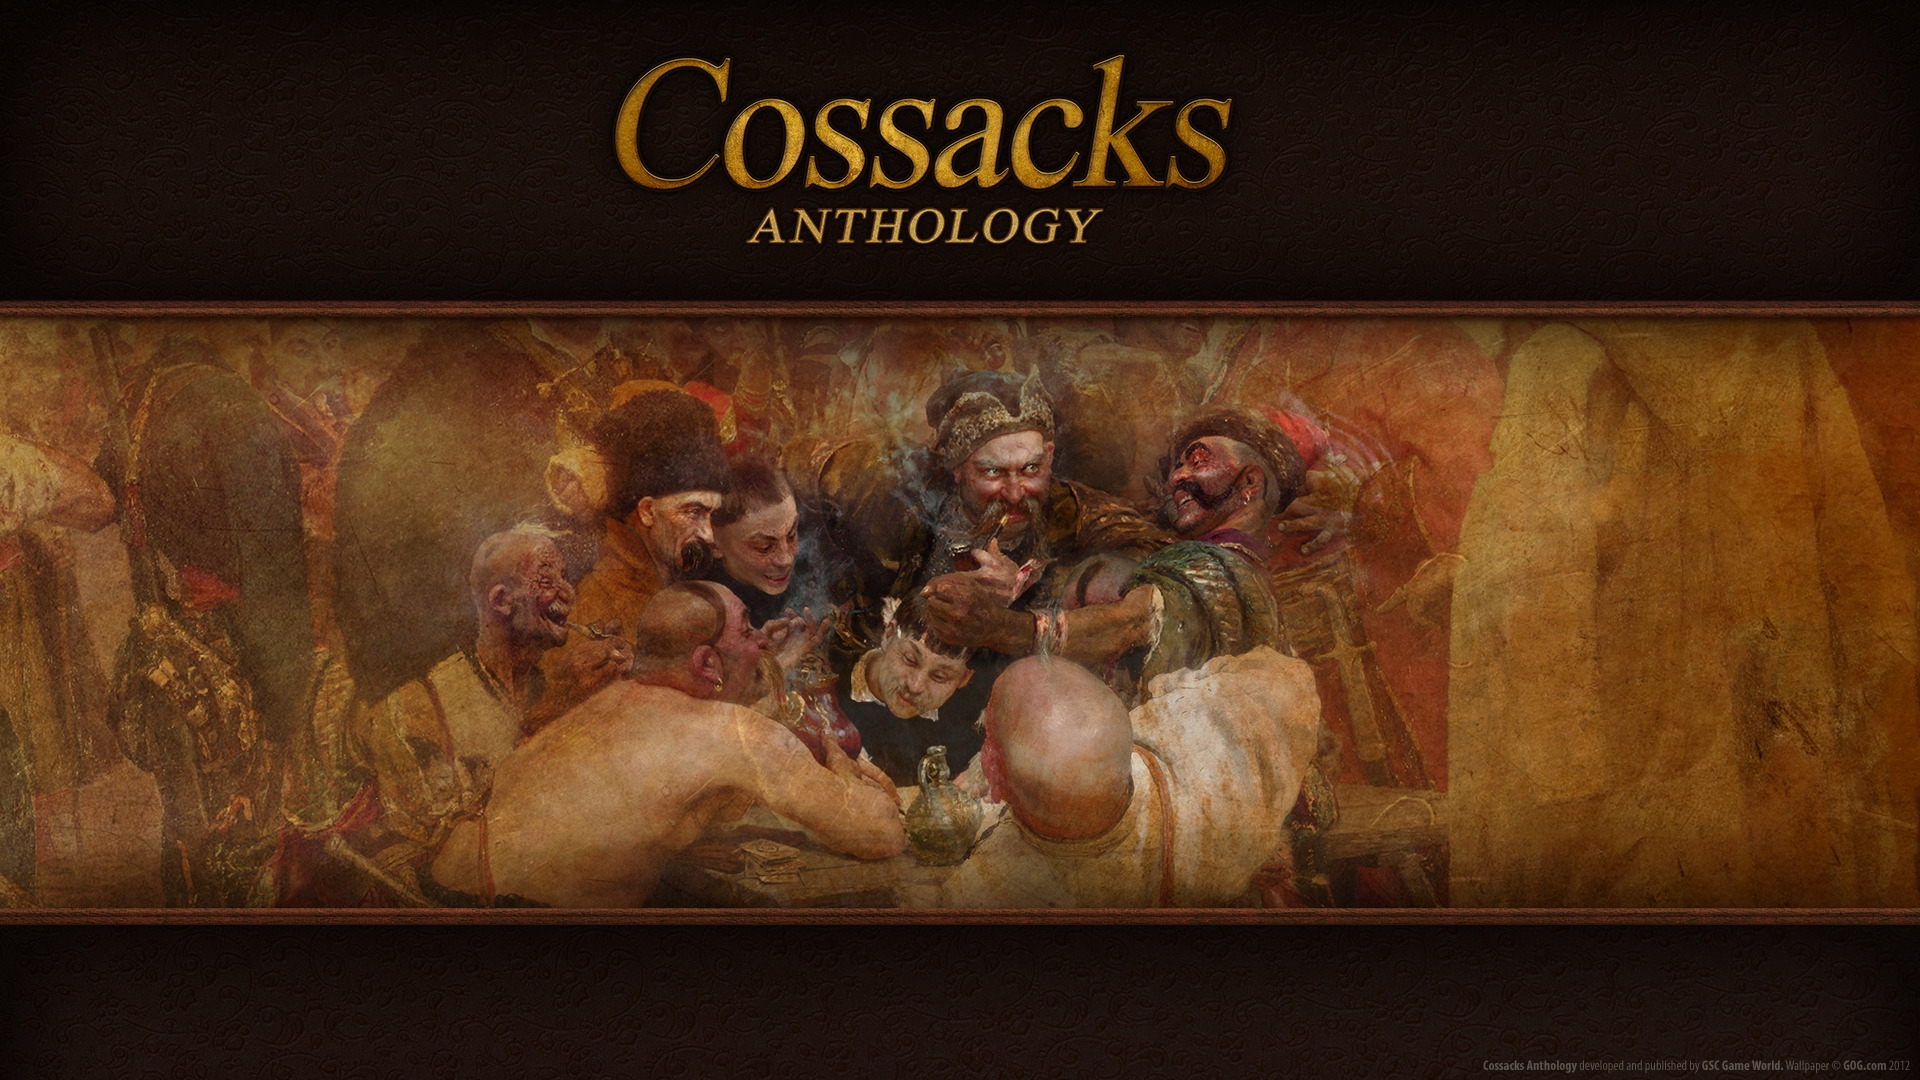 Cossacks Anthology for 1920 x 1080 HDTV 1080p resolution